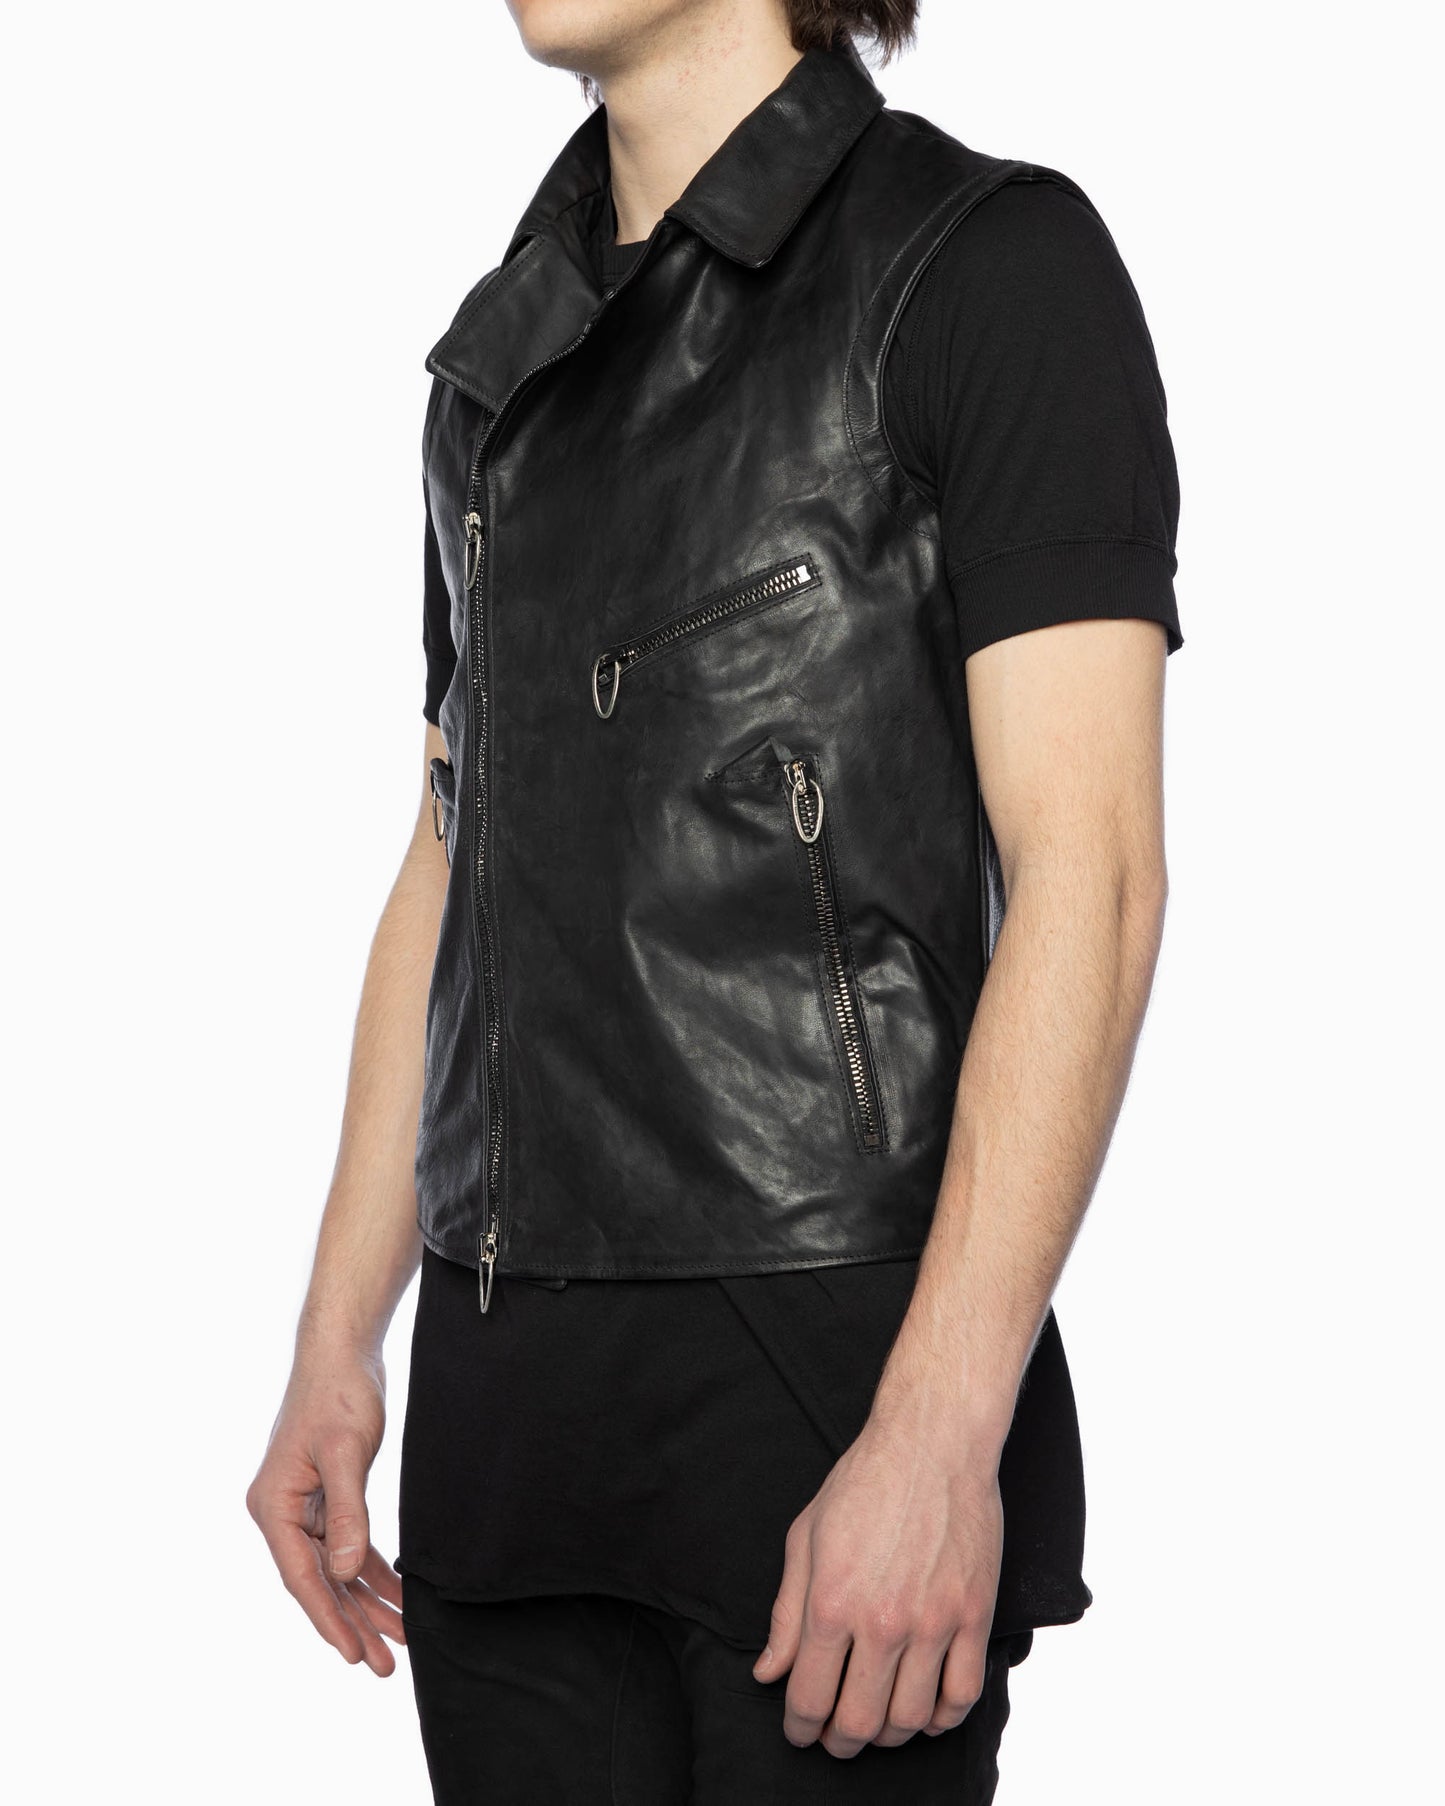 Black Sleeveless Horse Leather Perfecto Vest Jacket